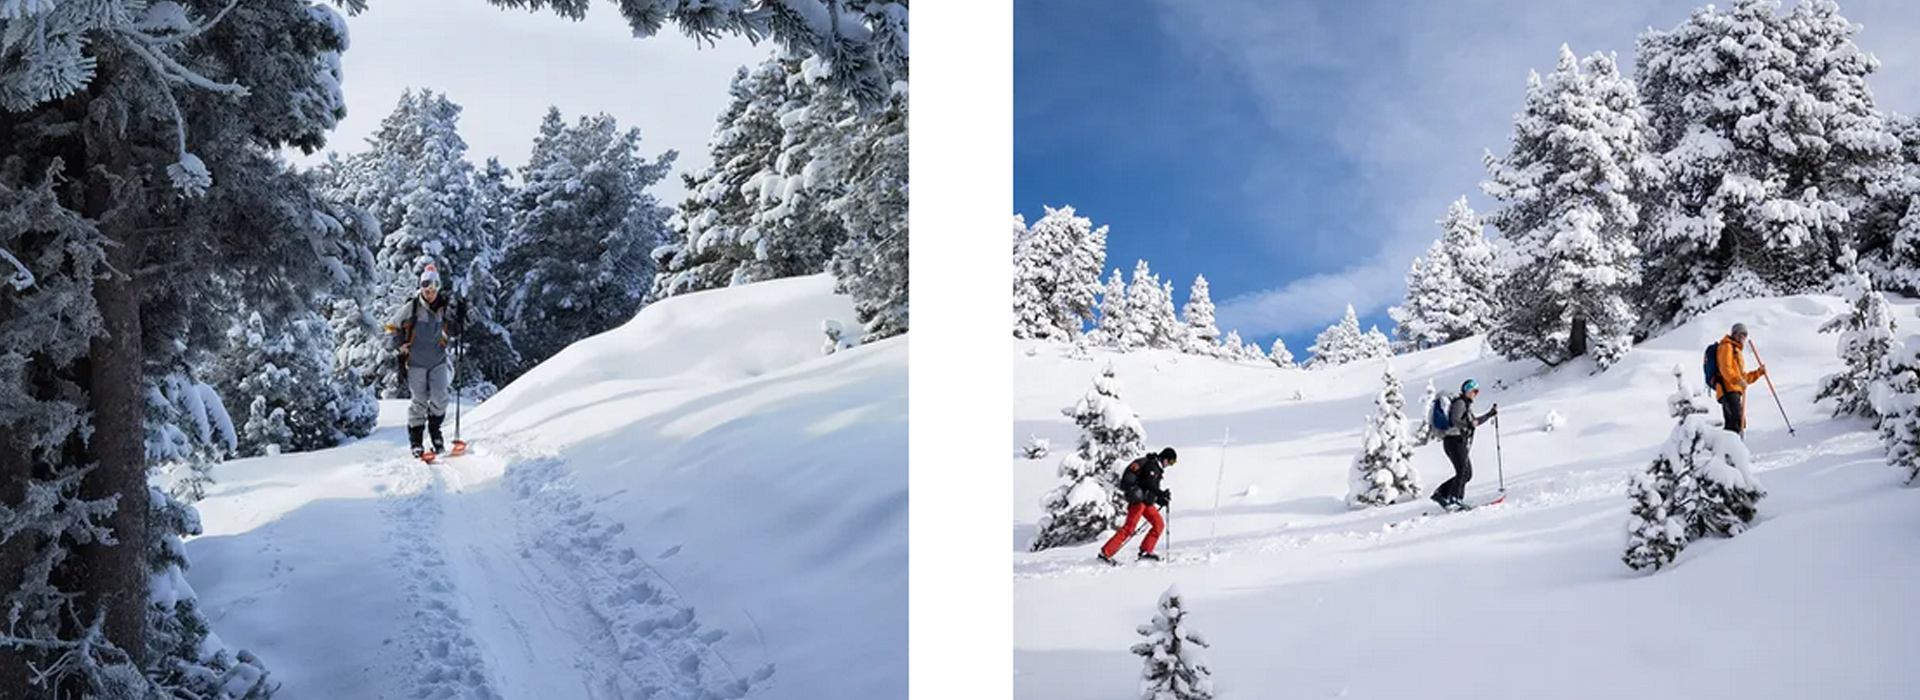 Chamrousse sortie initiation ski randonnée office tourisme grenoble hiver station montagne isère alpes france - © Agence Grenoble Alpes - Flavien Etheve